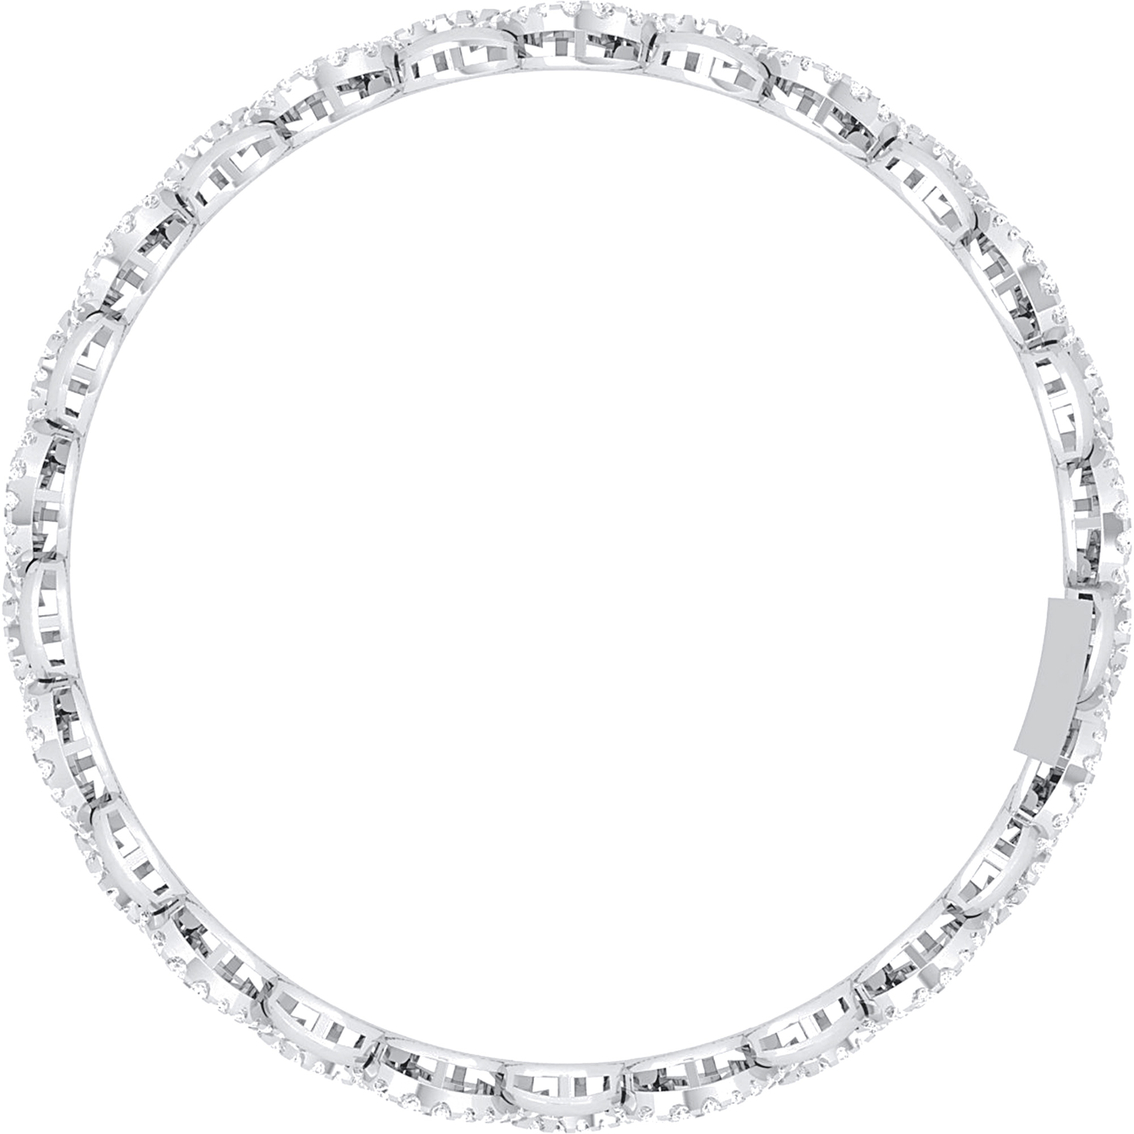 Lola's Love 10K White Gold 2 CTW Diamond Bracelet - Image 2 of 2